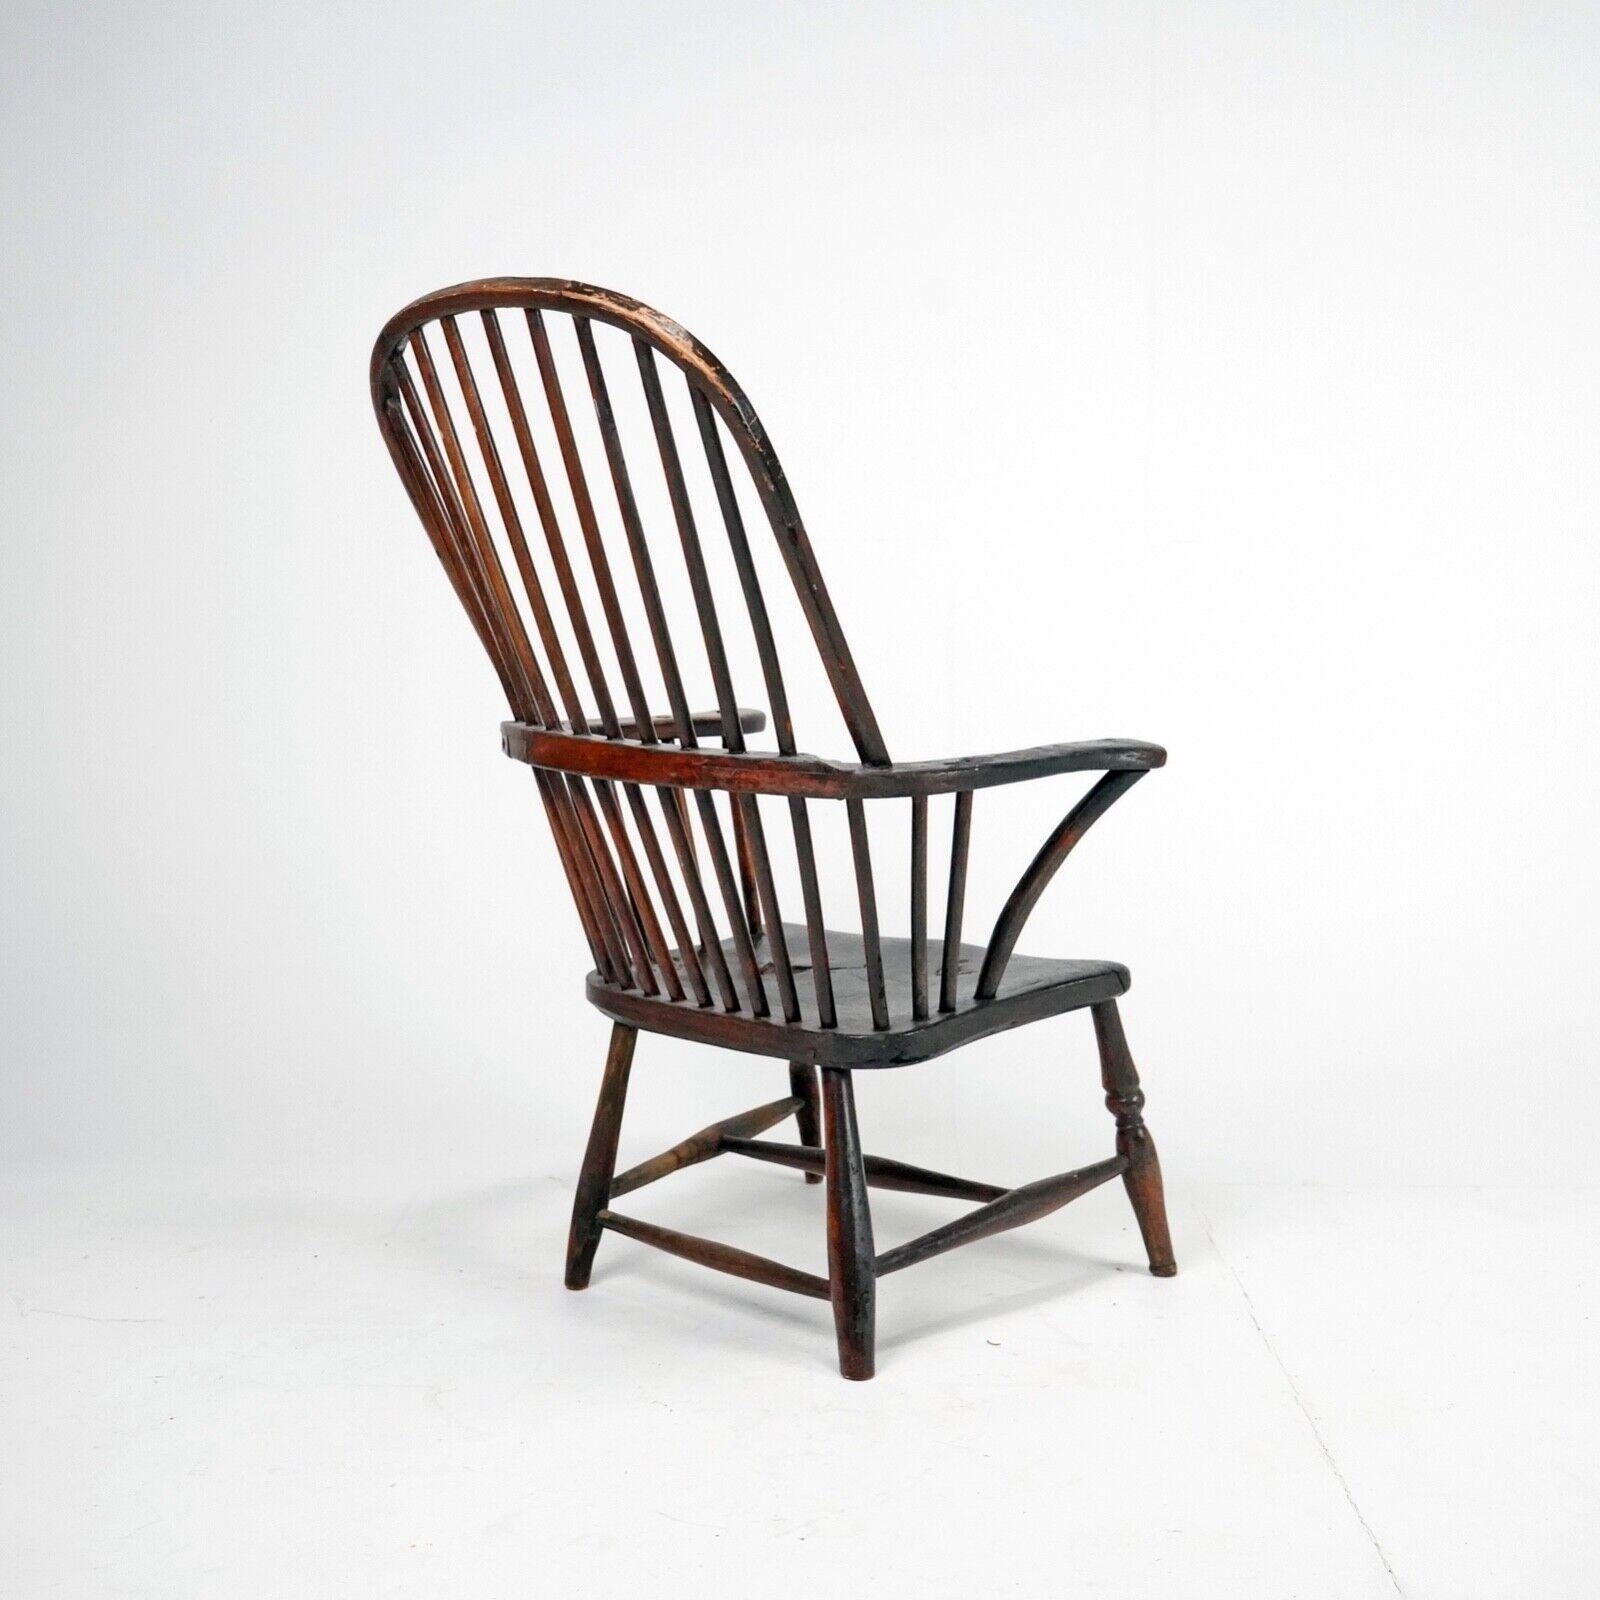 Late 18th Century English Hoop Back Windsor Chair 2